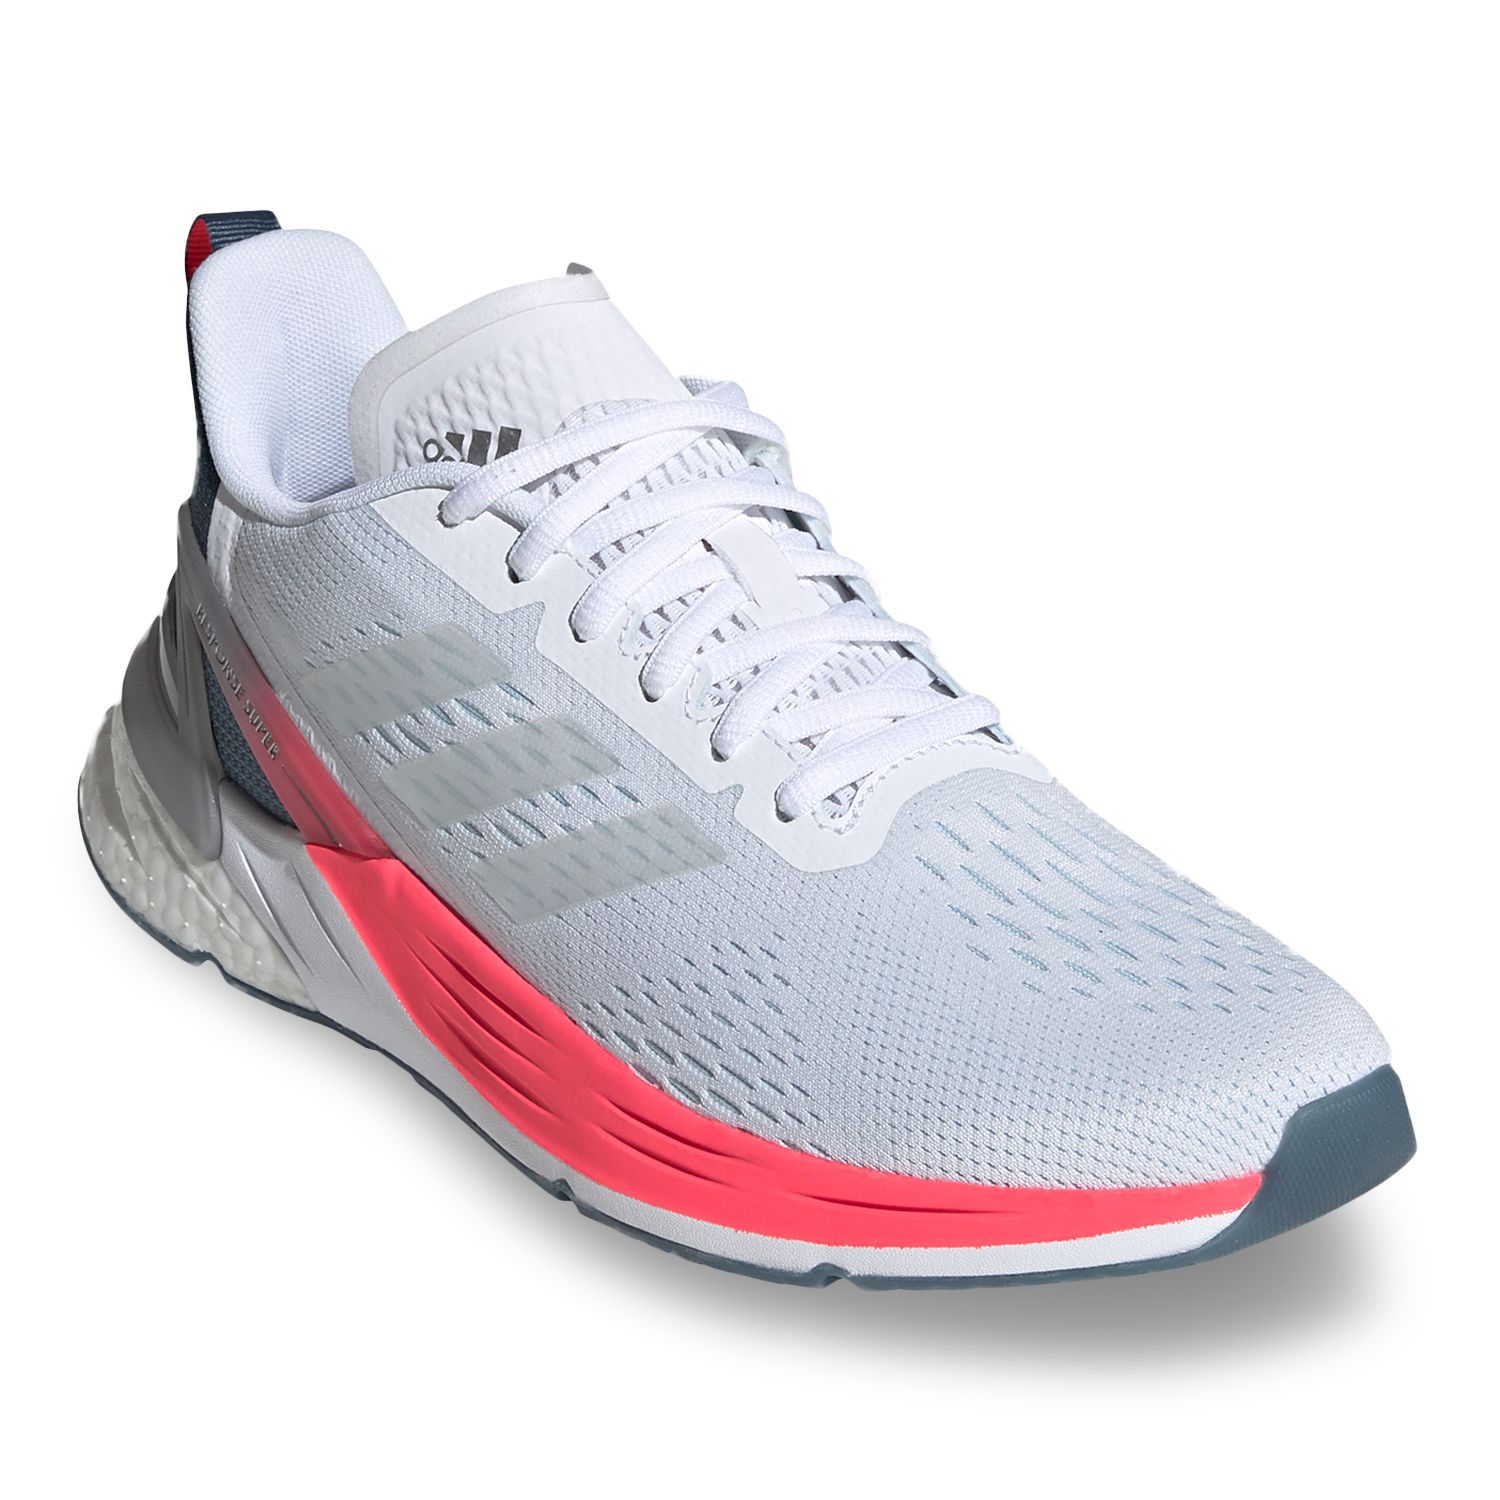 adidas response super women's running shoes